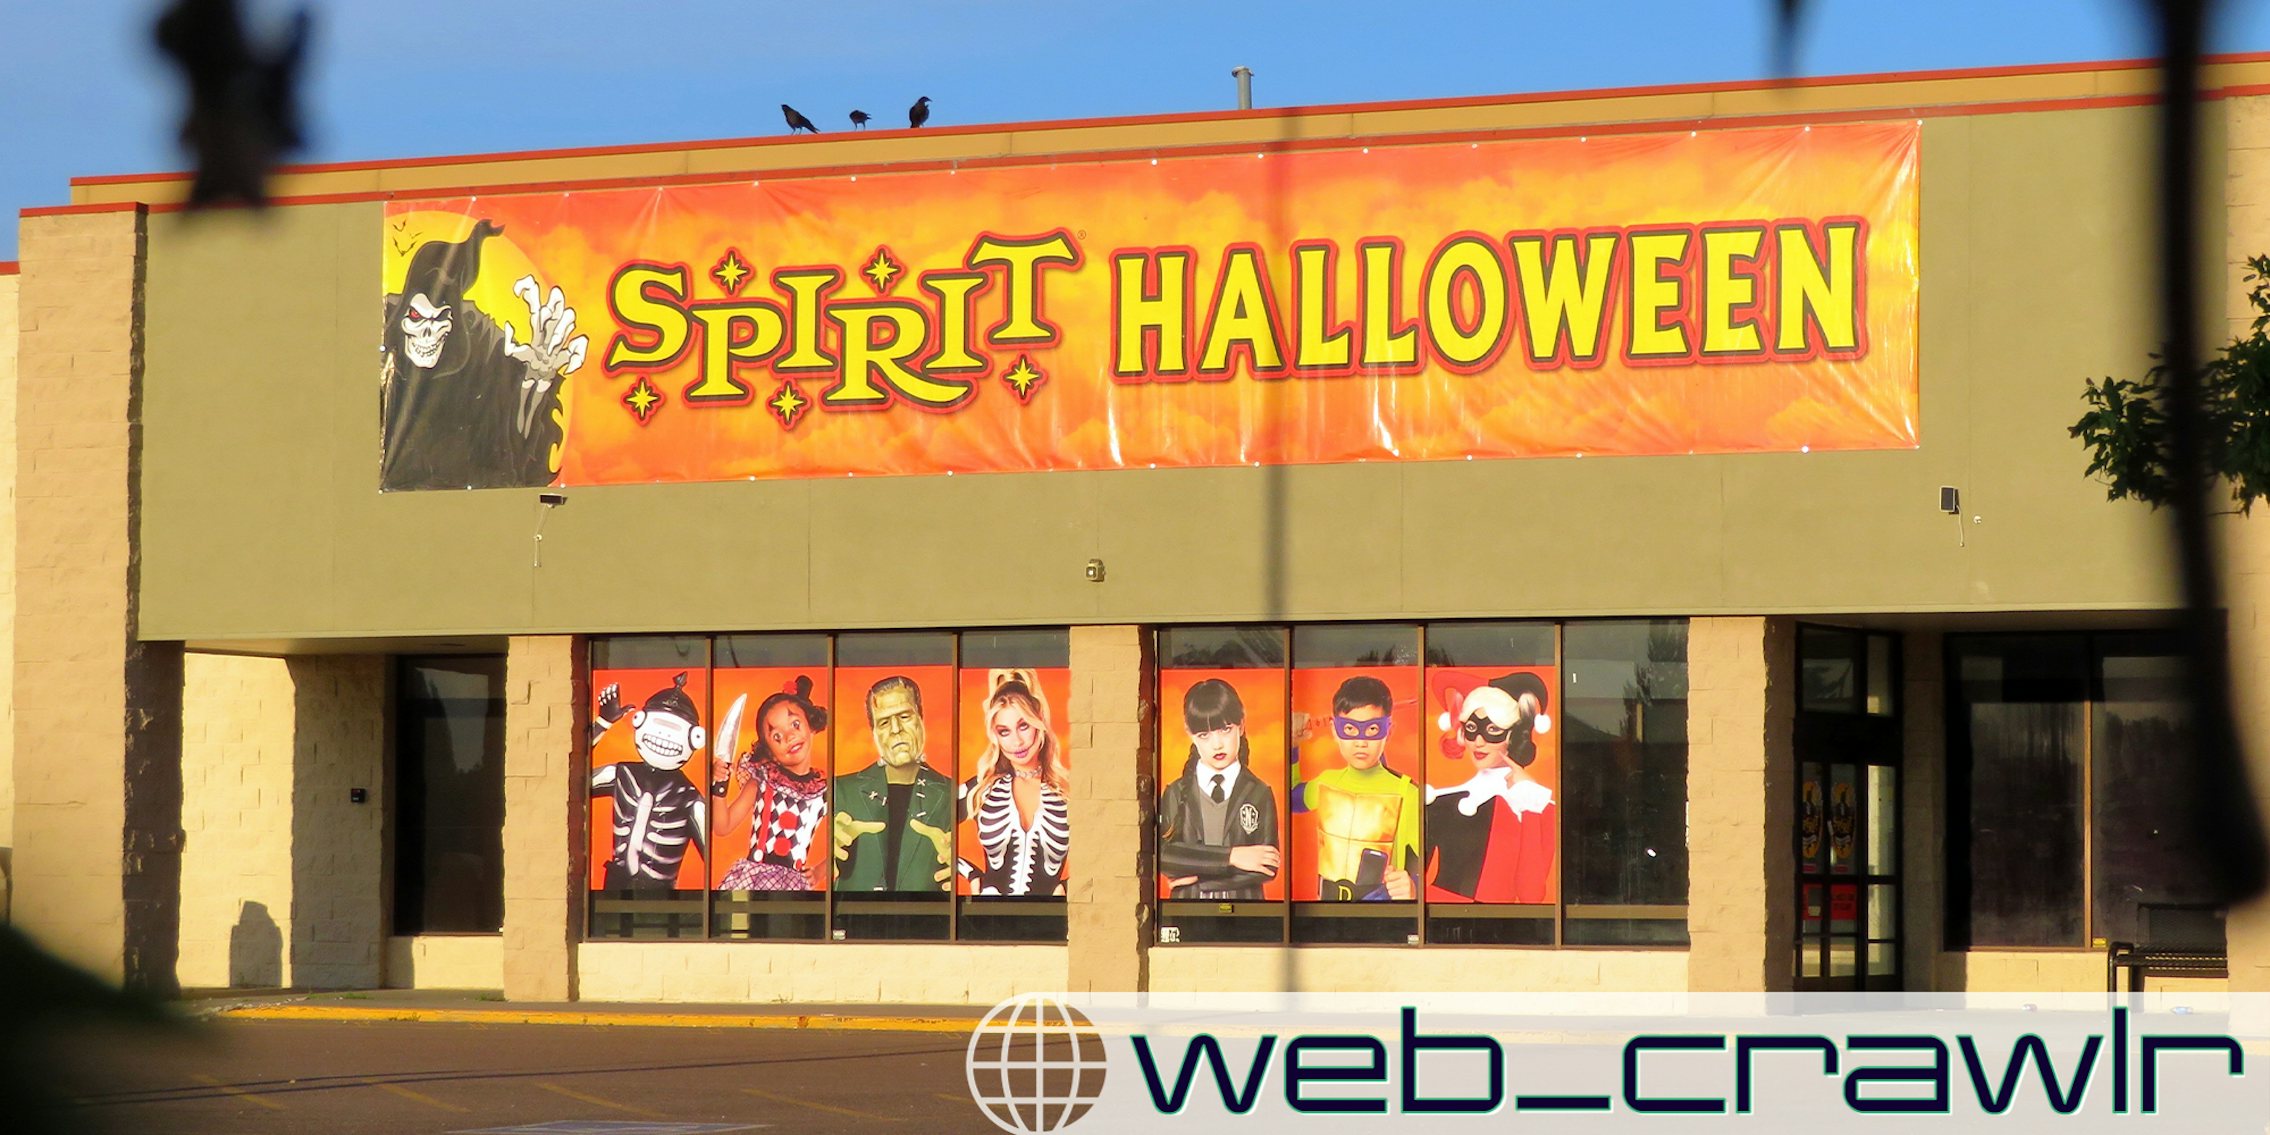 Sharing Spirit Halloween horror stories